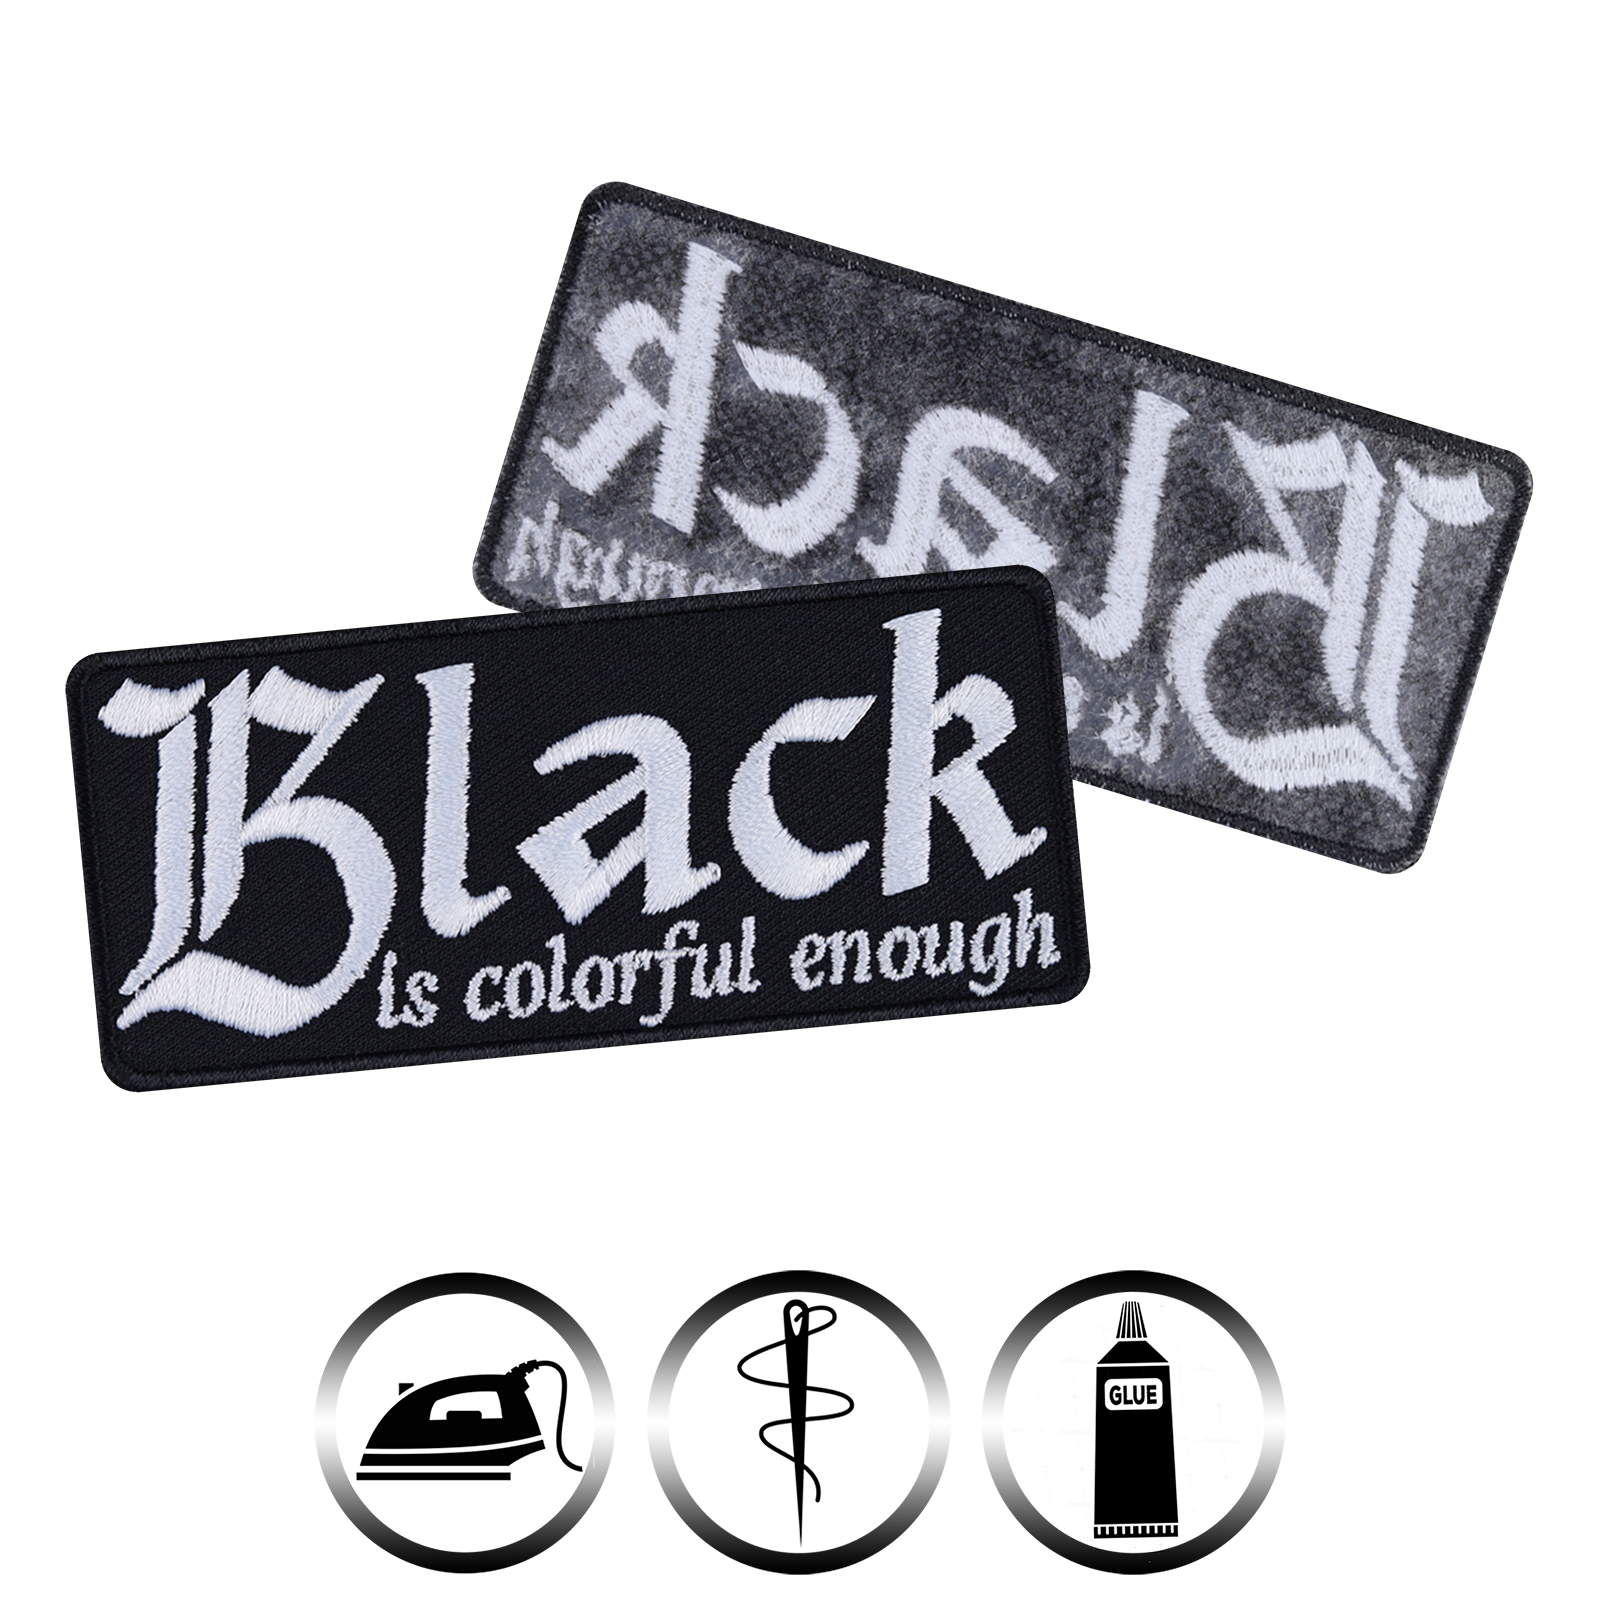 Black is colorful enough - Patch